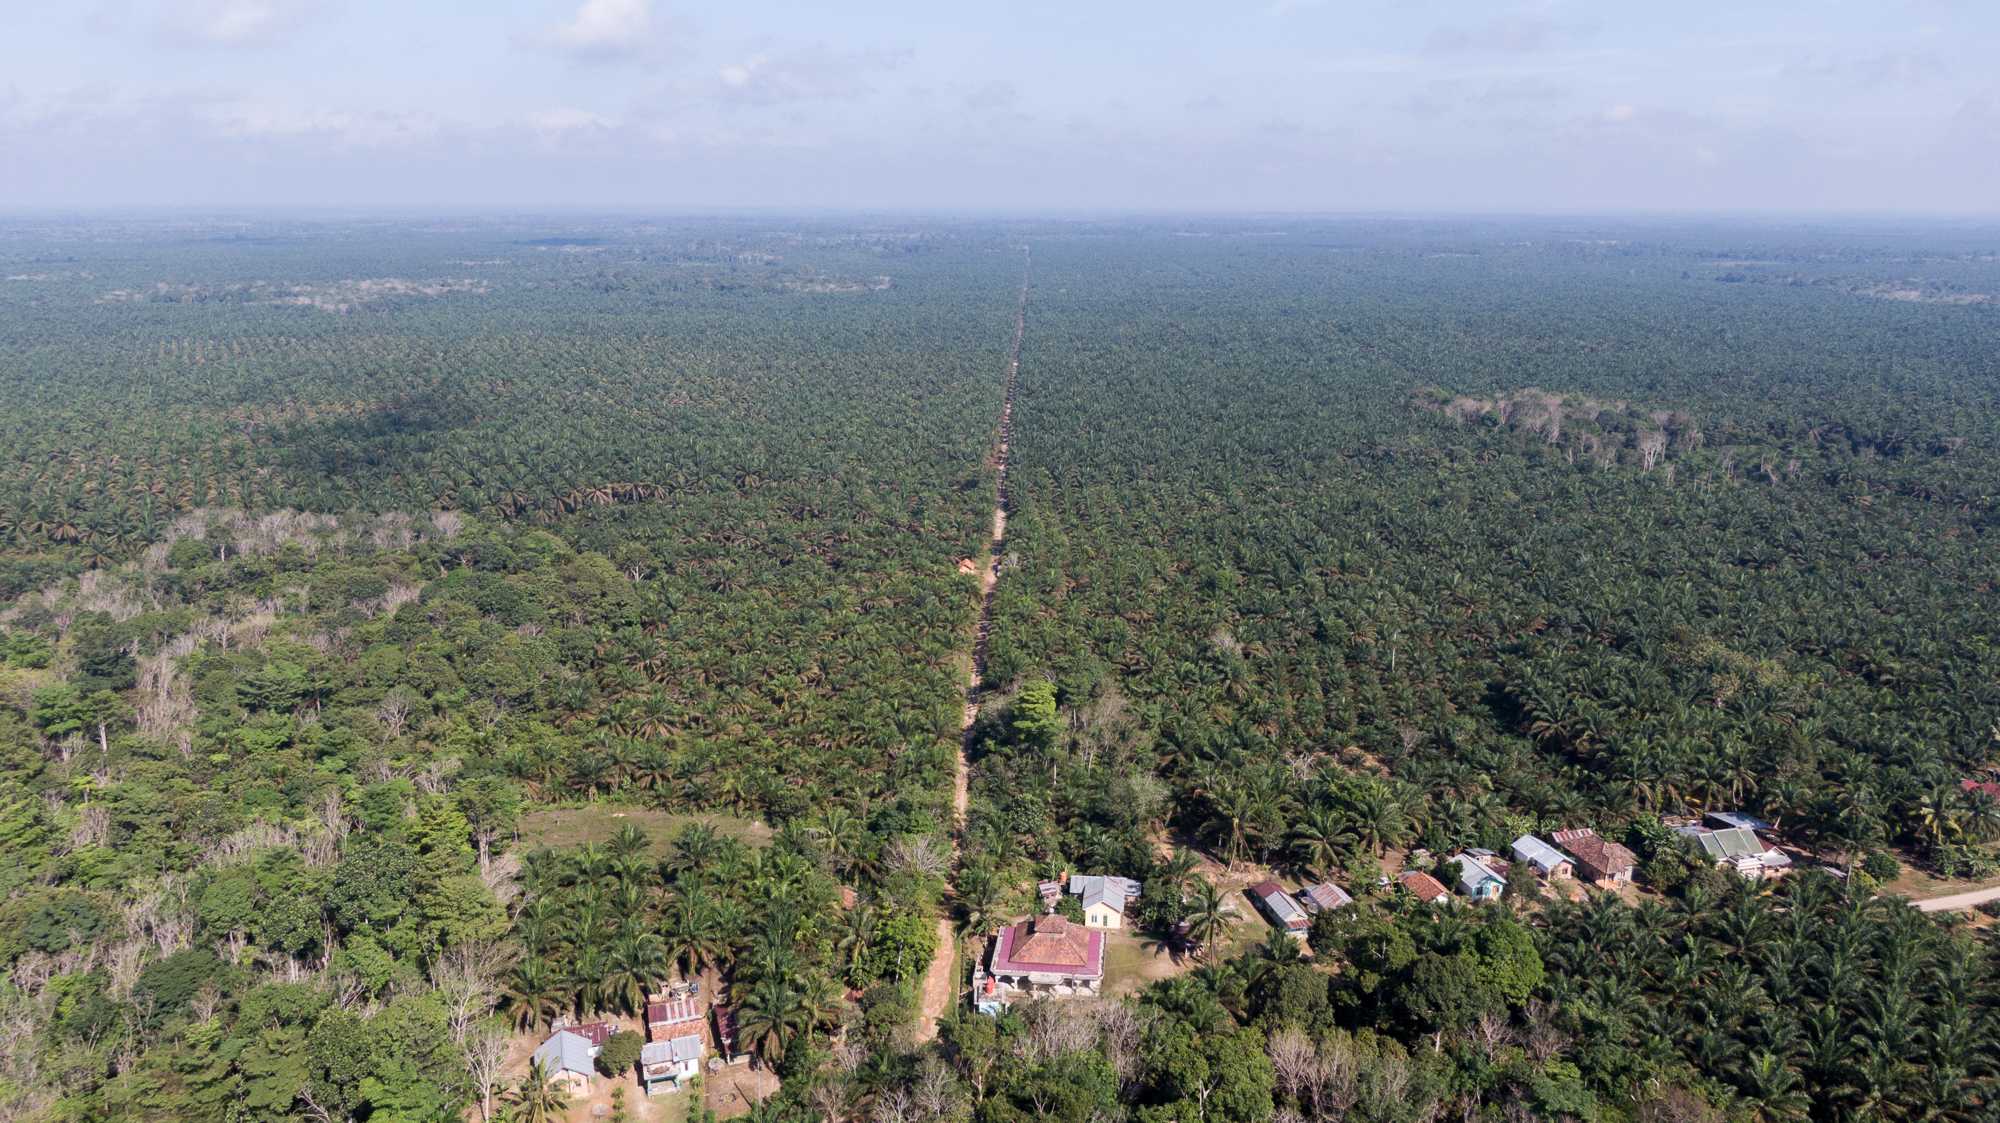 The village of Bina Karya and London Sumatra’s palm oil concession in North Musi Rawas district. 